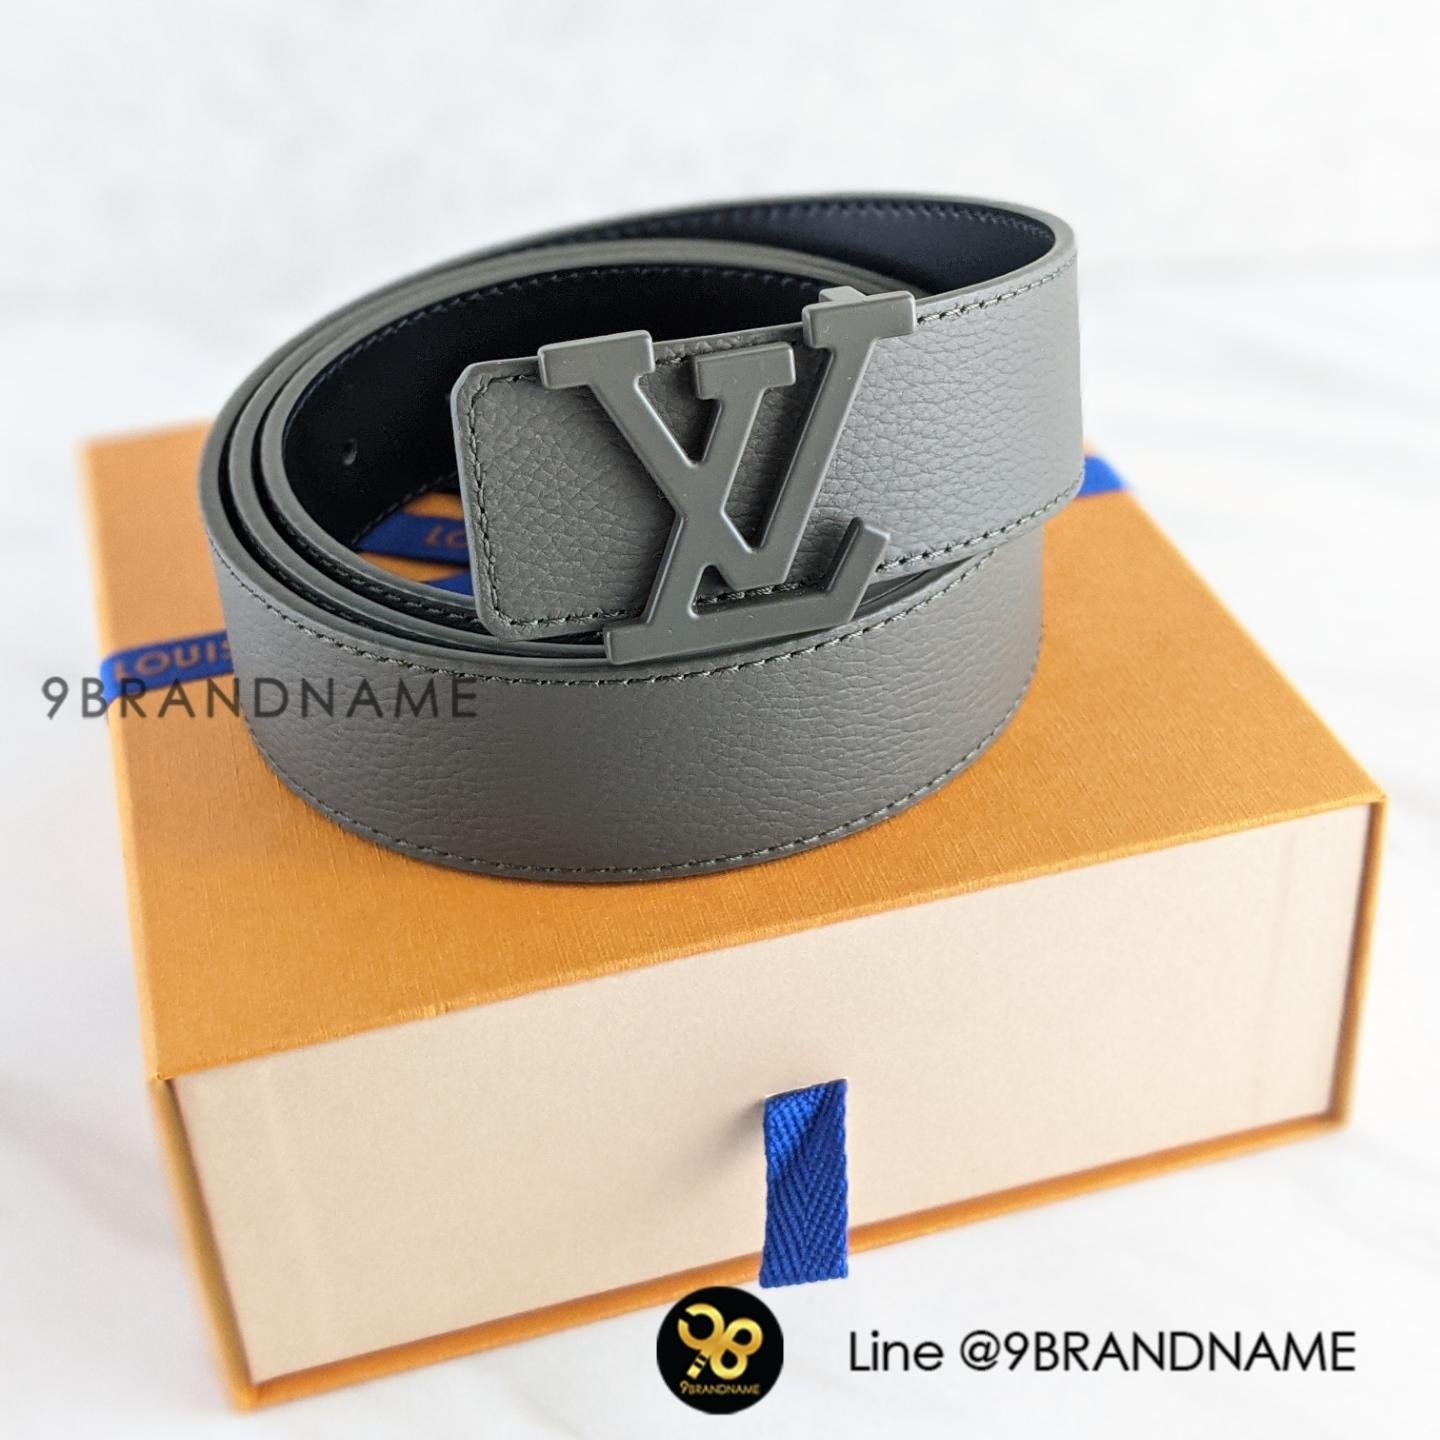 Louis Vuitton LV Aerogram 35MM Reversible Belt